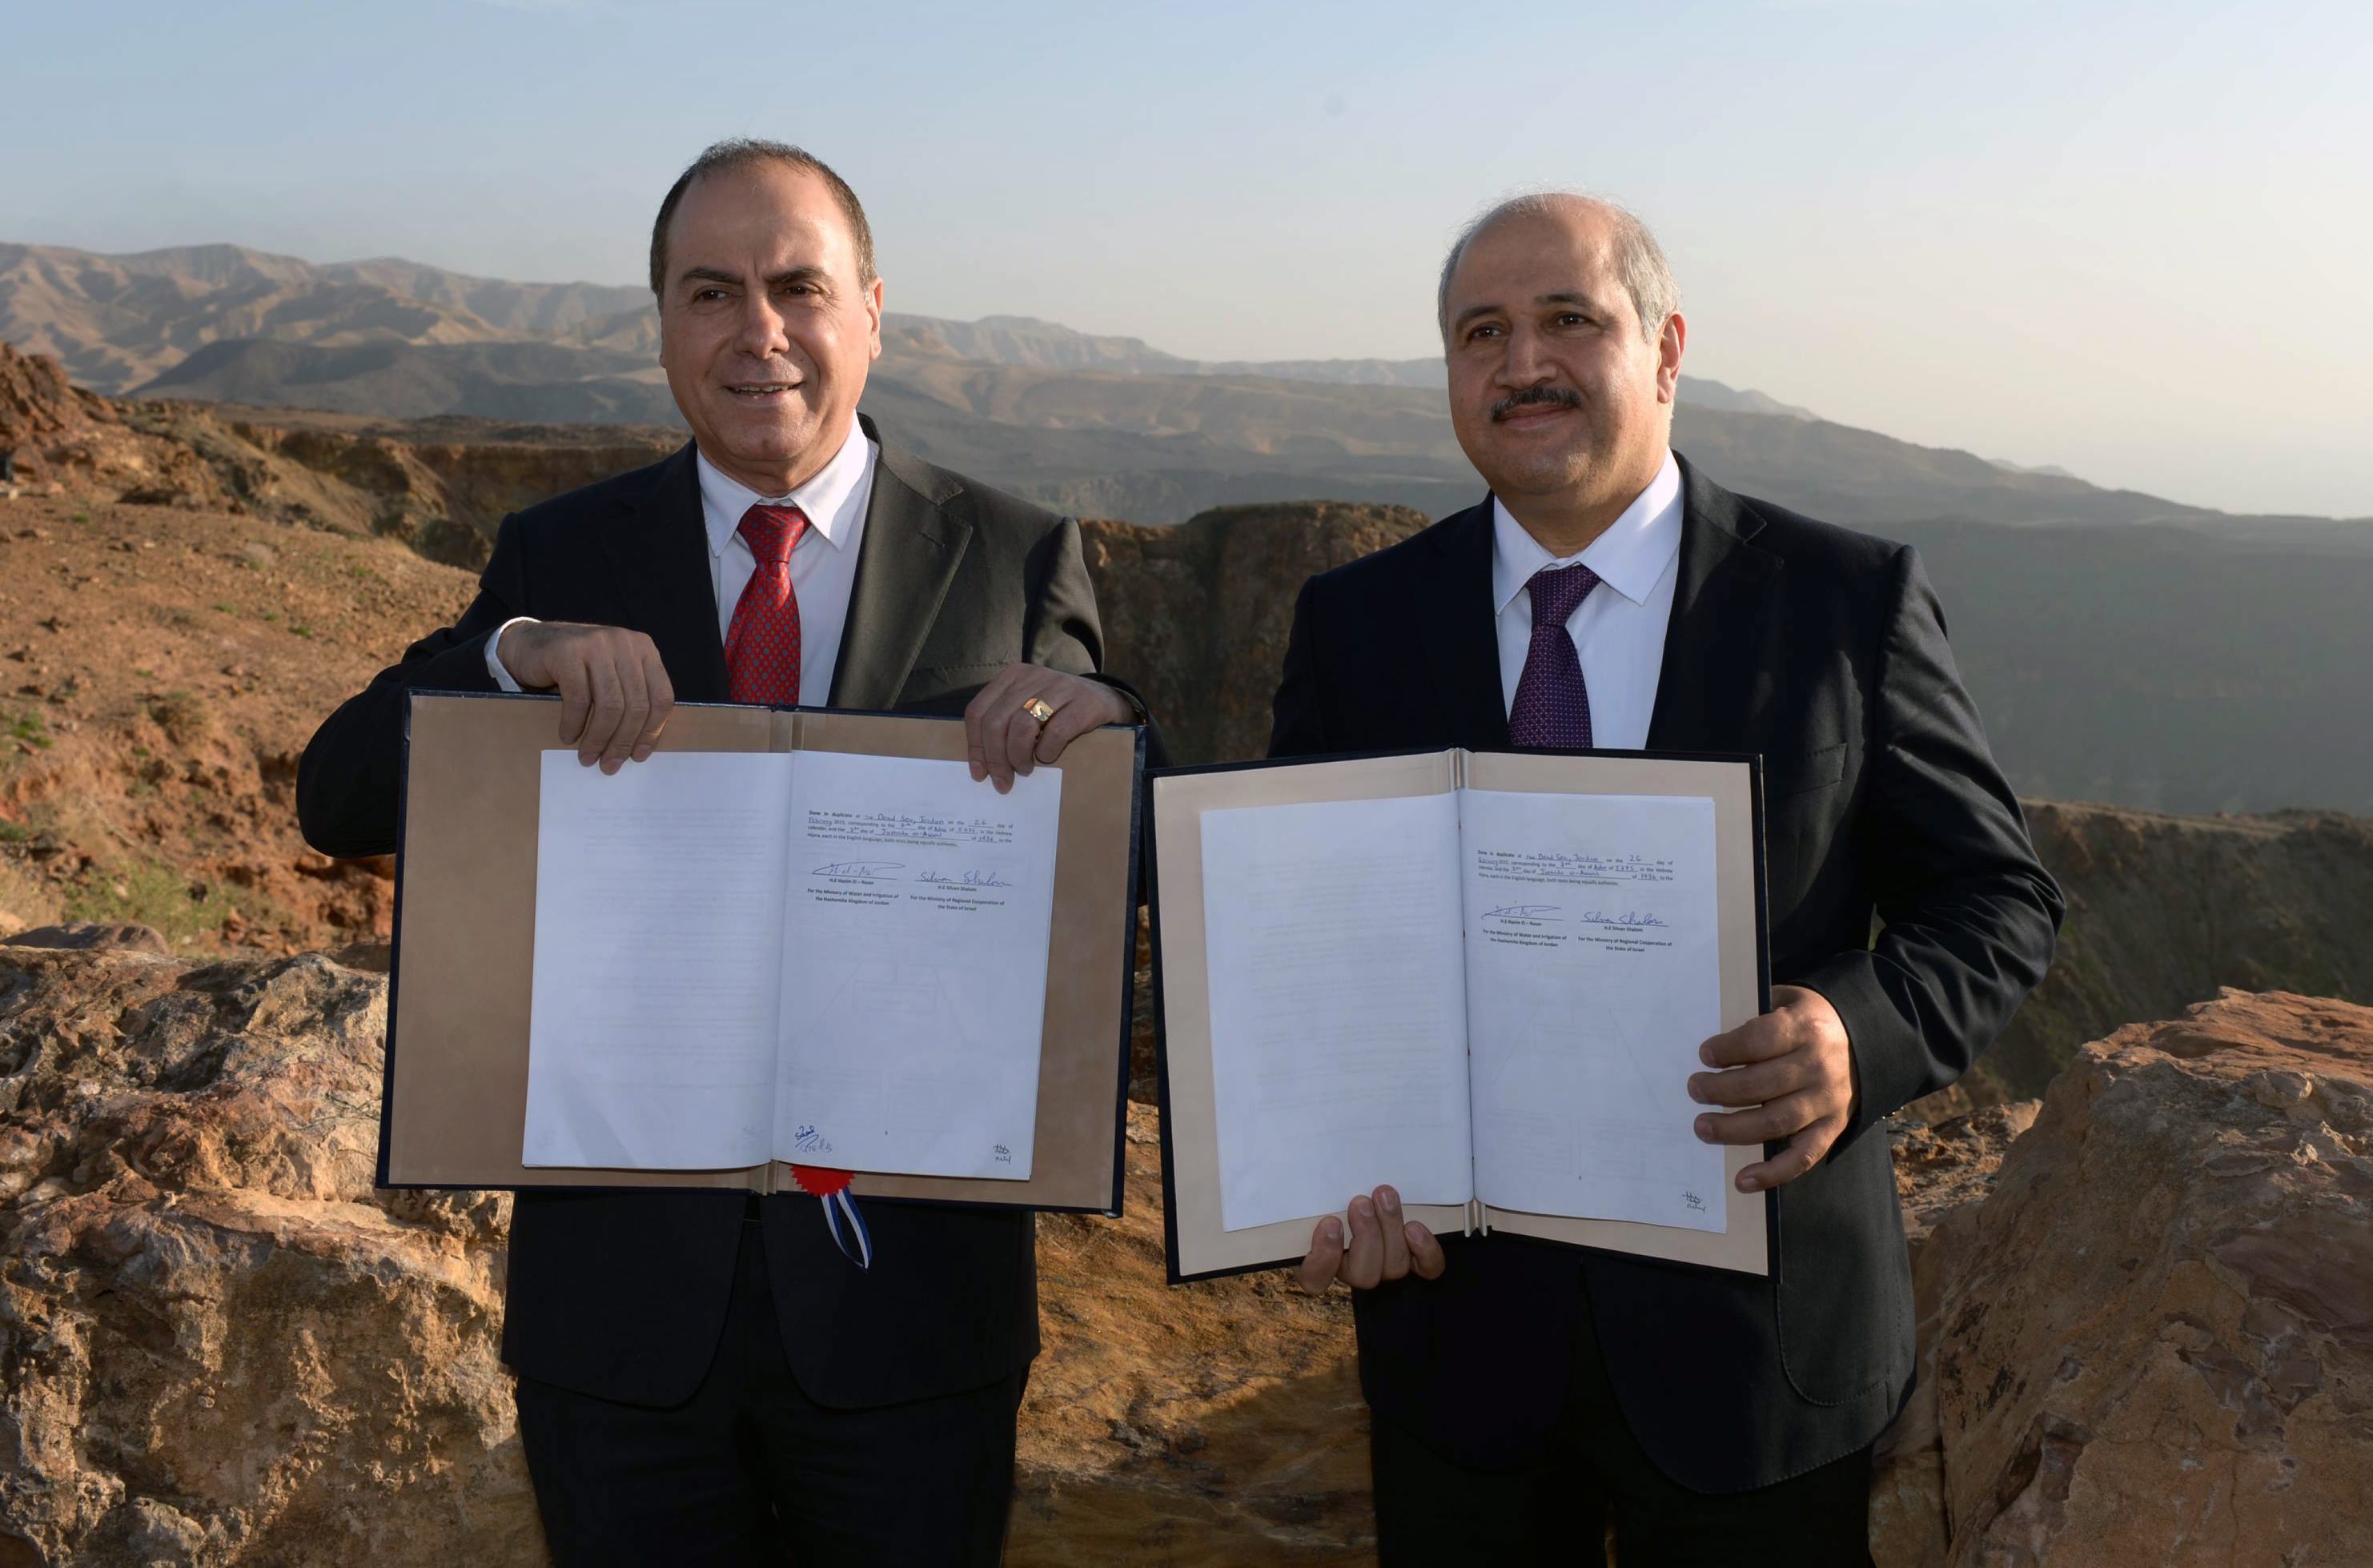 Signing of Dead Sea Red Sea agreement on dead Sea in Jordan